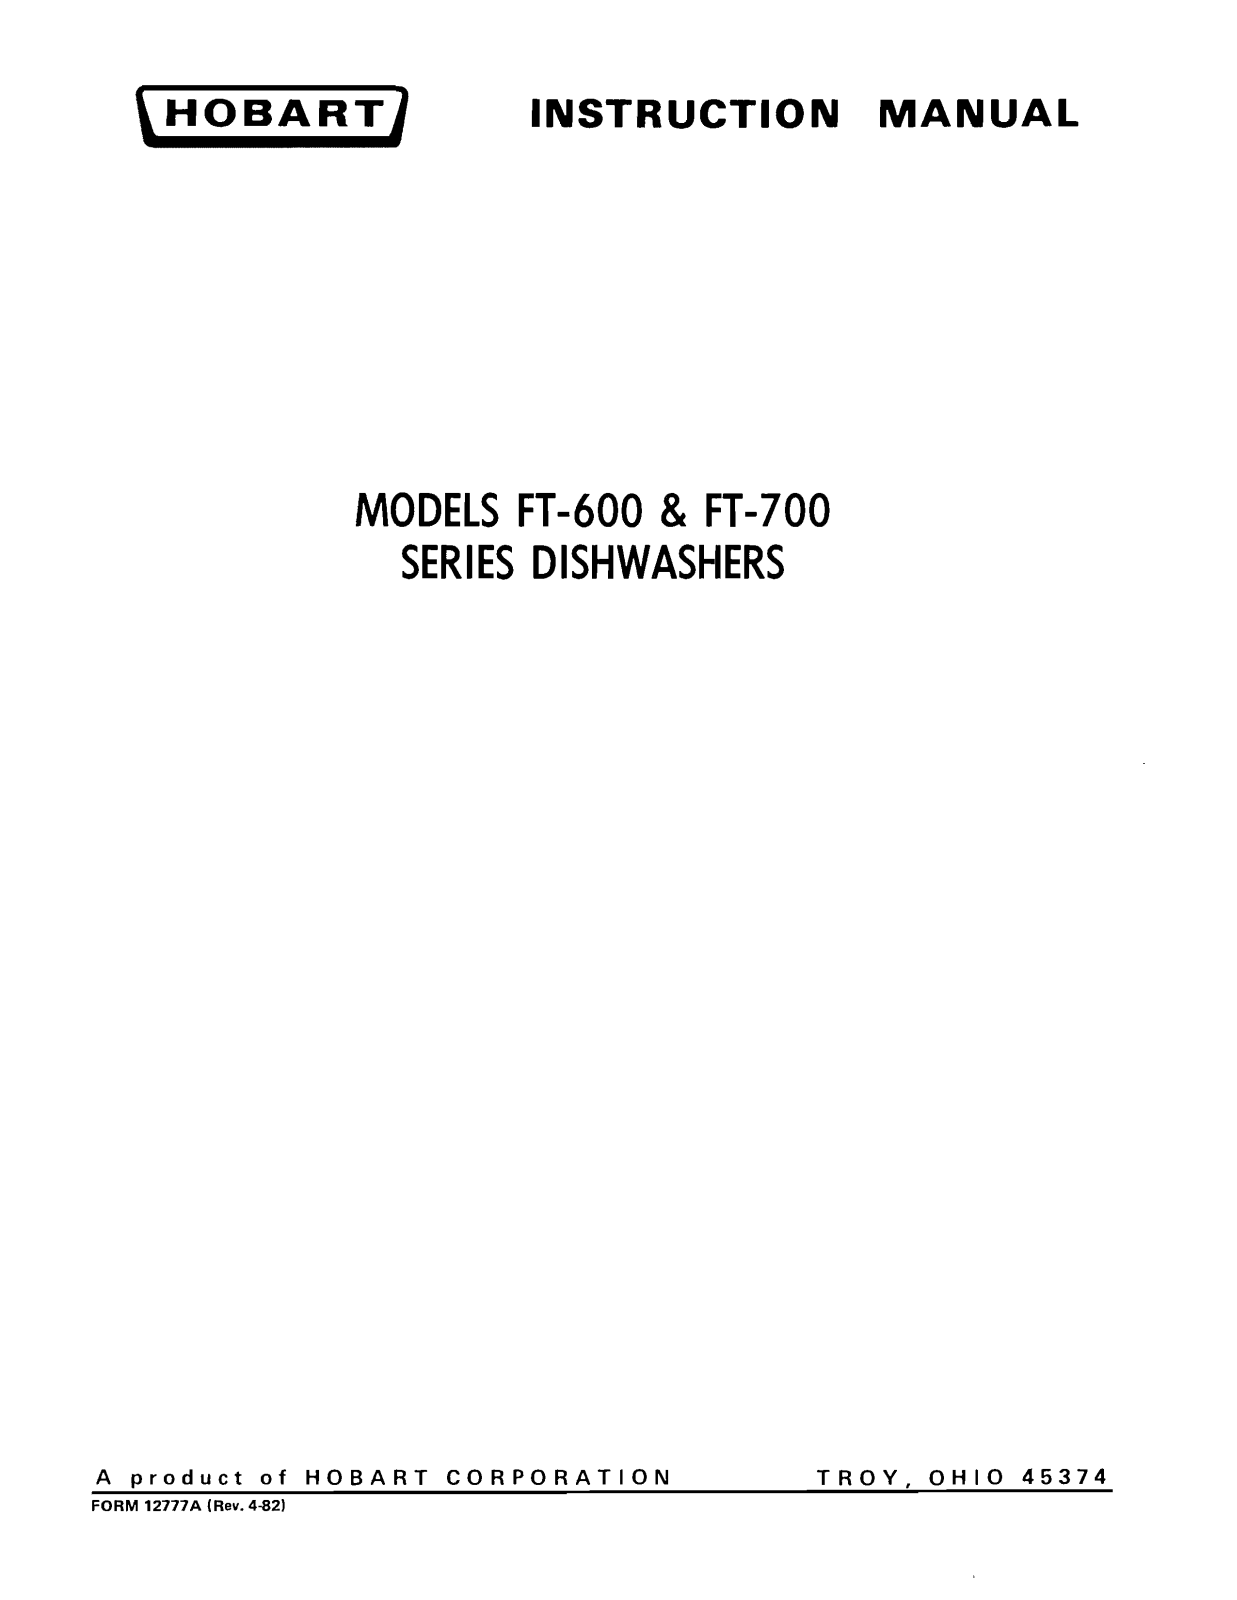 Hobart FT-600 Installation Manual